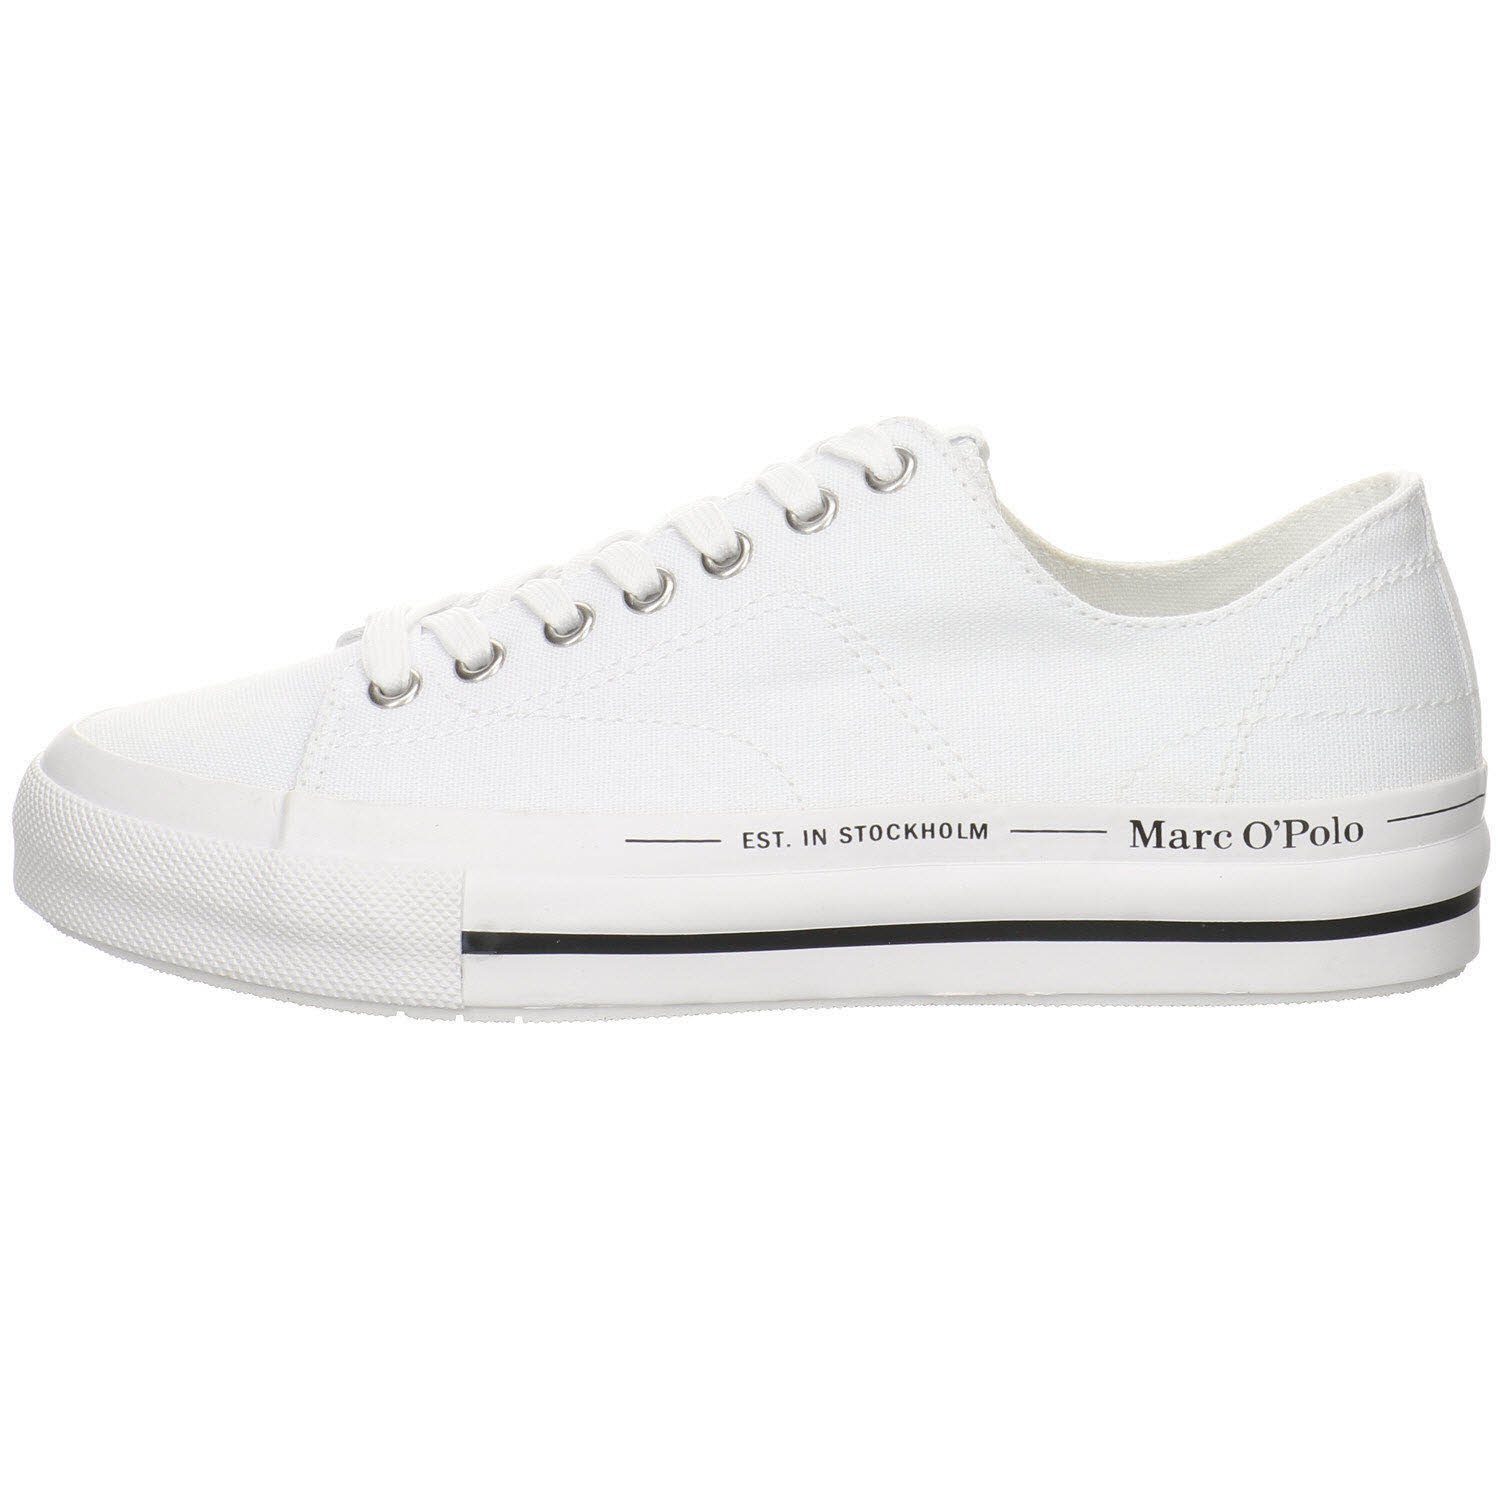 Marc O'Polo Damen Sneaker Schuhe Sneaker Sport Halbschuhe Schnürschuh Textil white